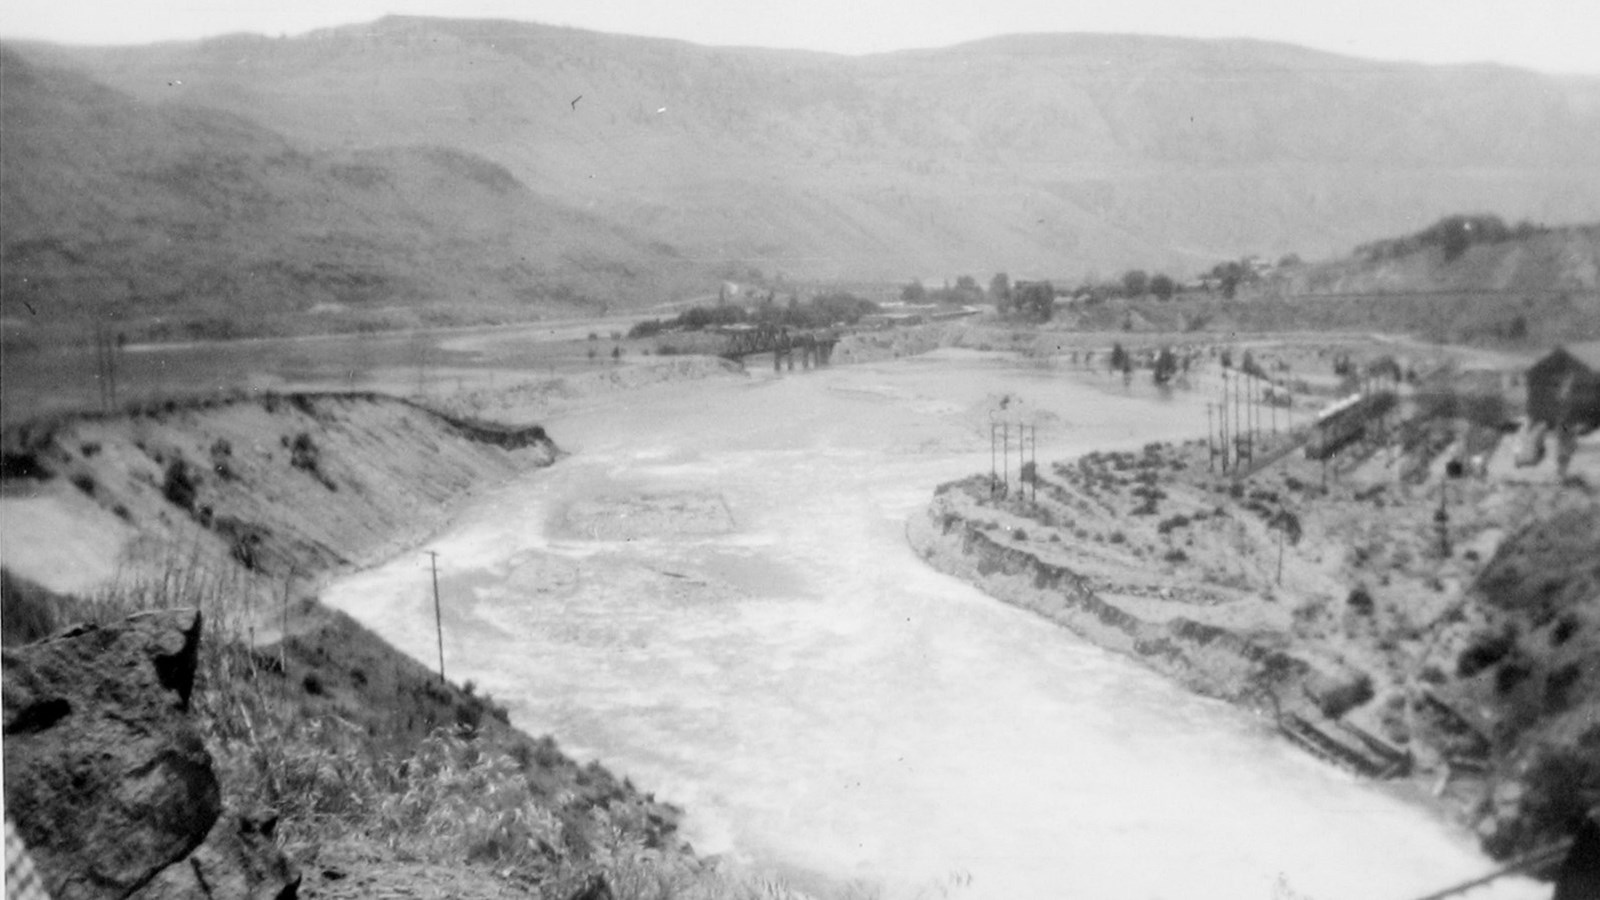 Historic black and white photograph of Nespelem Campsite area